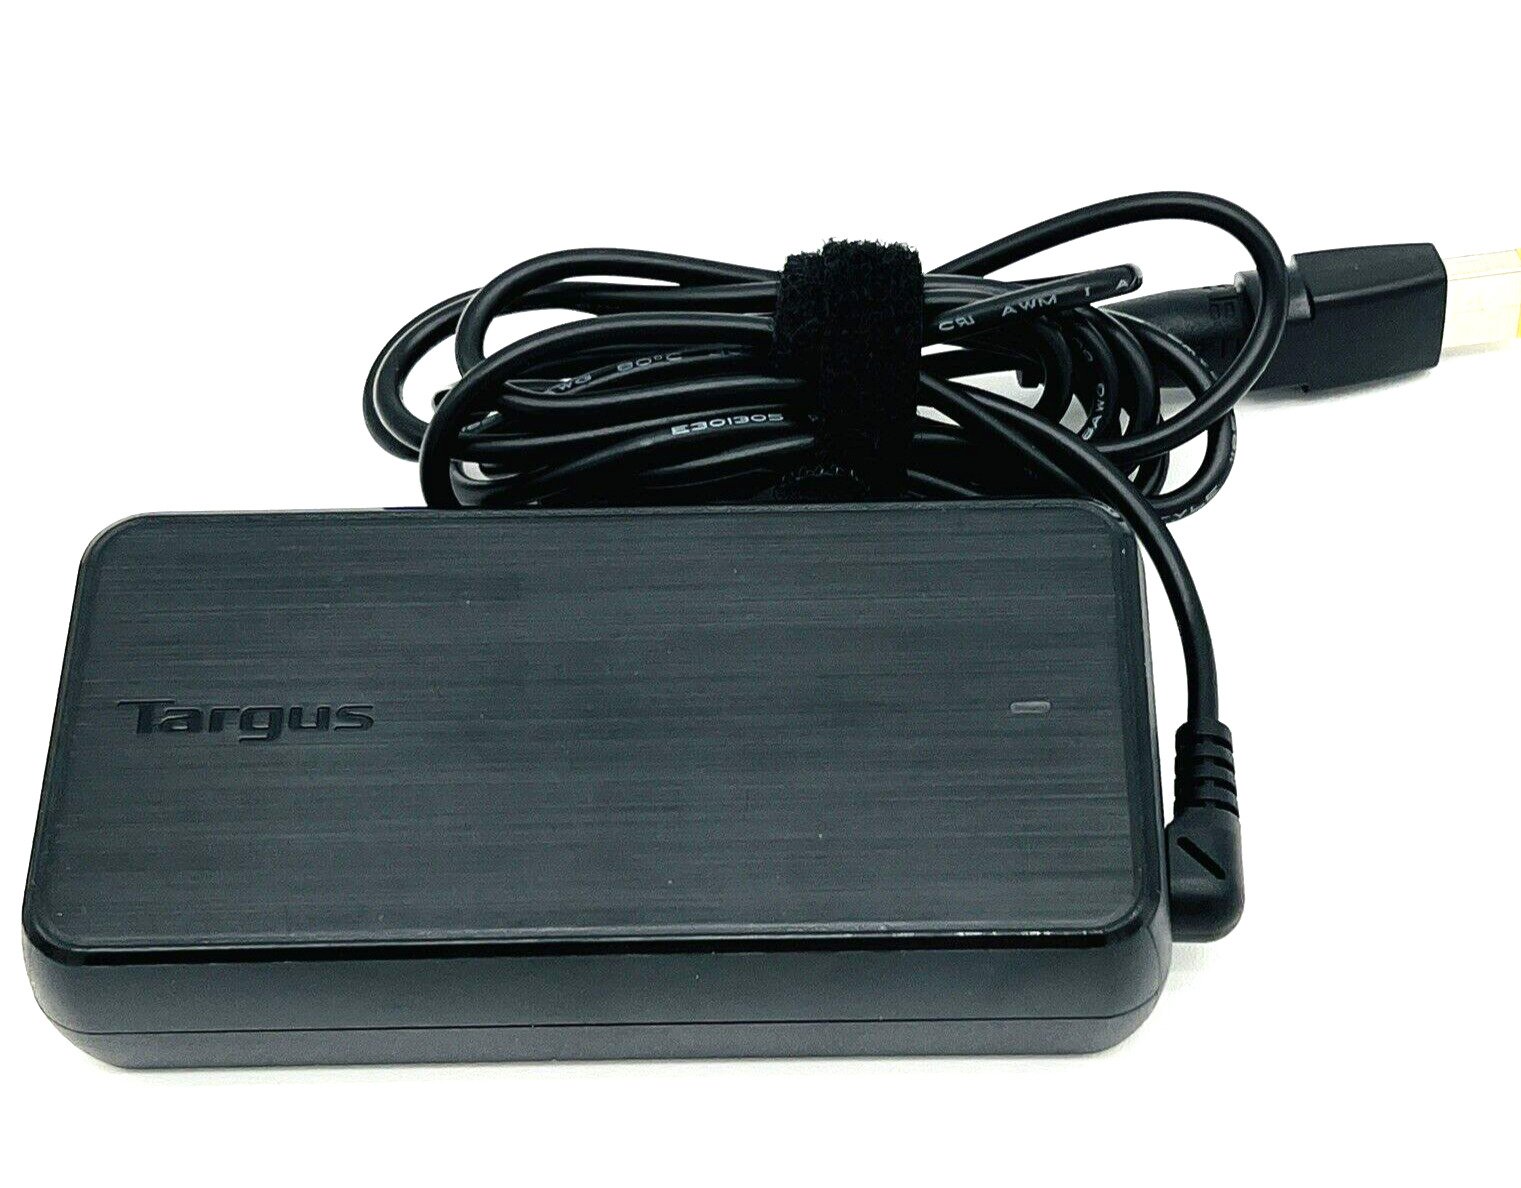 Targus APA90US  90 Watt AC Universal Laptop Charger Adapter  PART ONLY - NO TIP